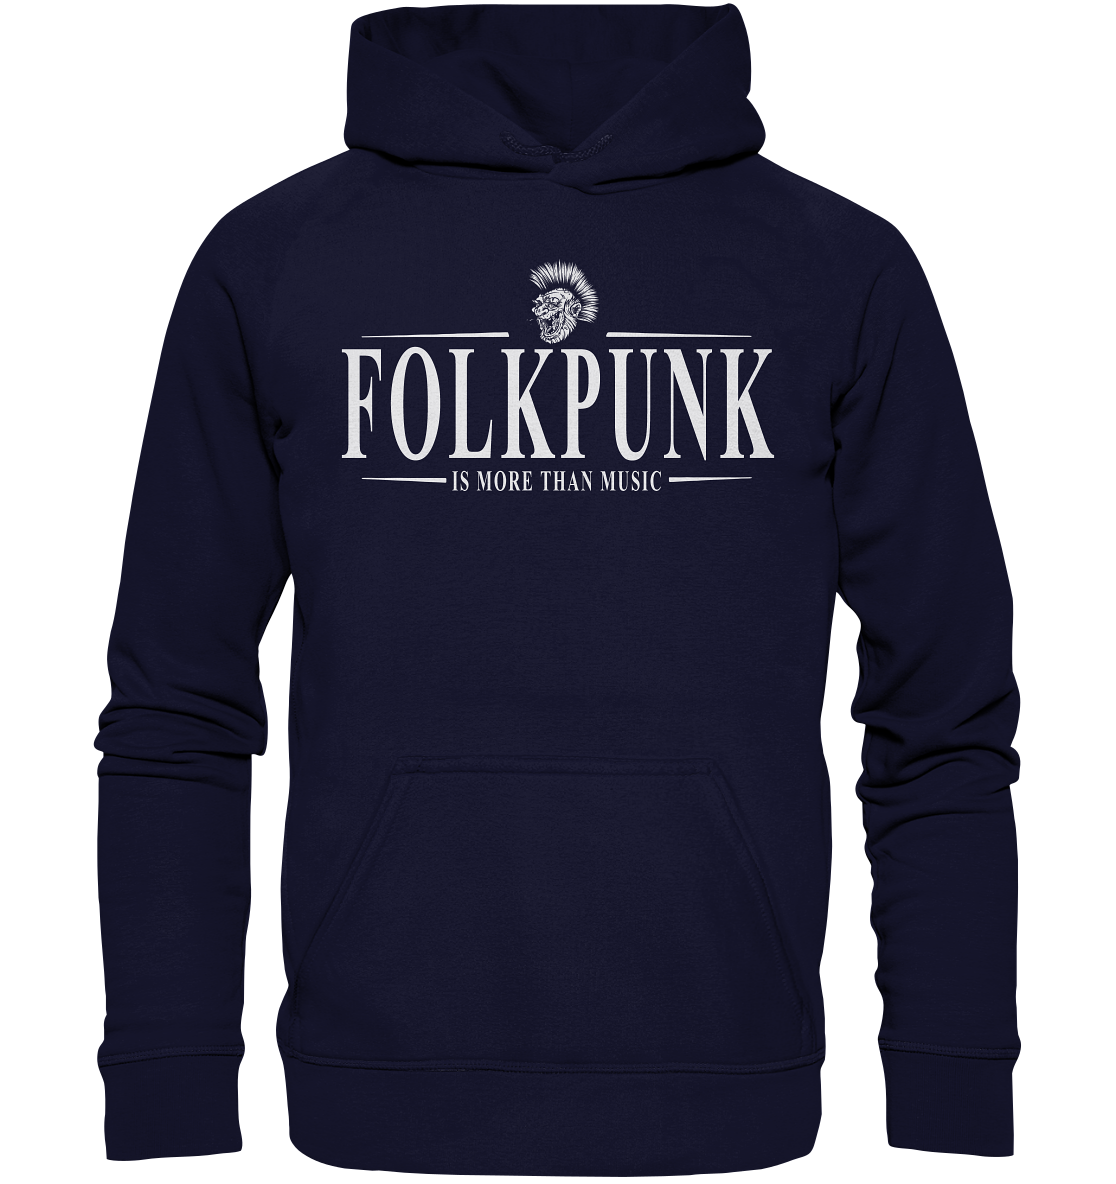 Folkpunk "Is More Than Music" - Basic Unisex Hoodie